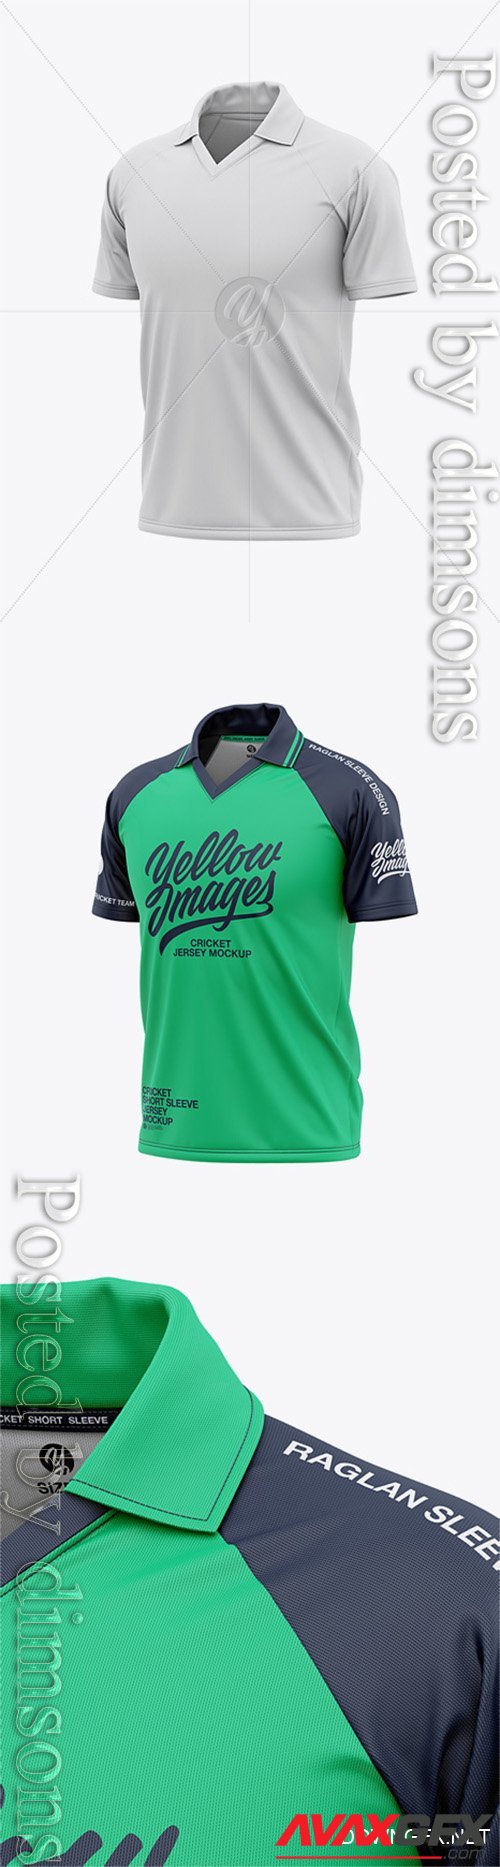 Men's Short Sleeve Cricket Jersey / Polo V-Neck Shirt - Front Half Side View 39941